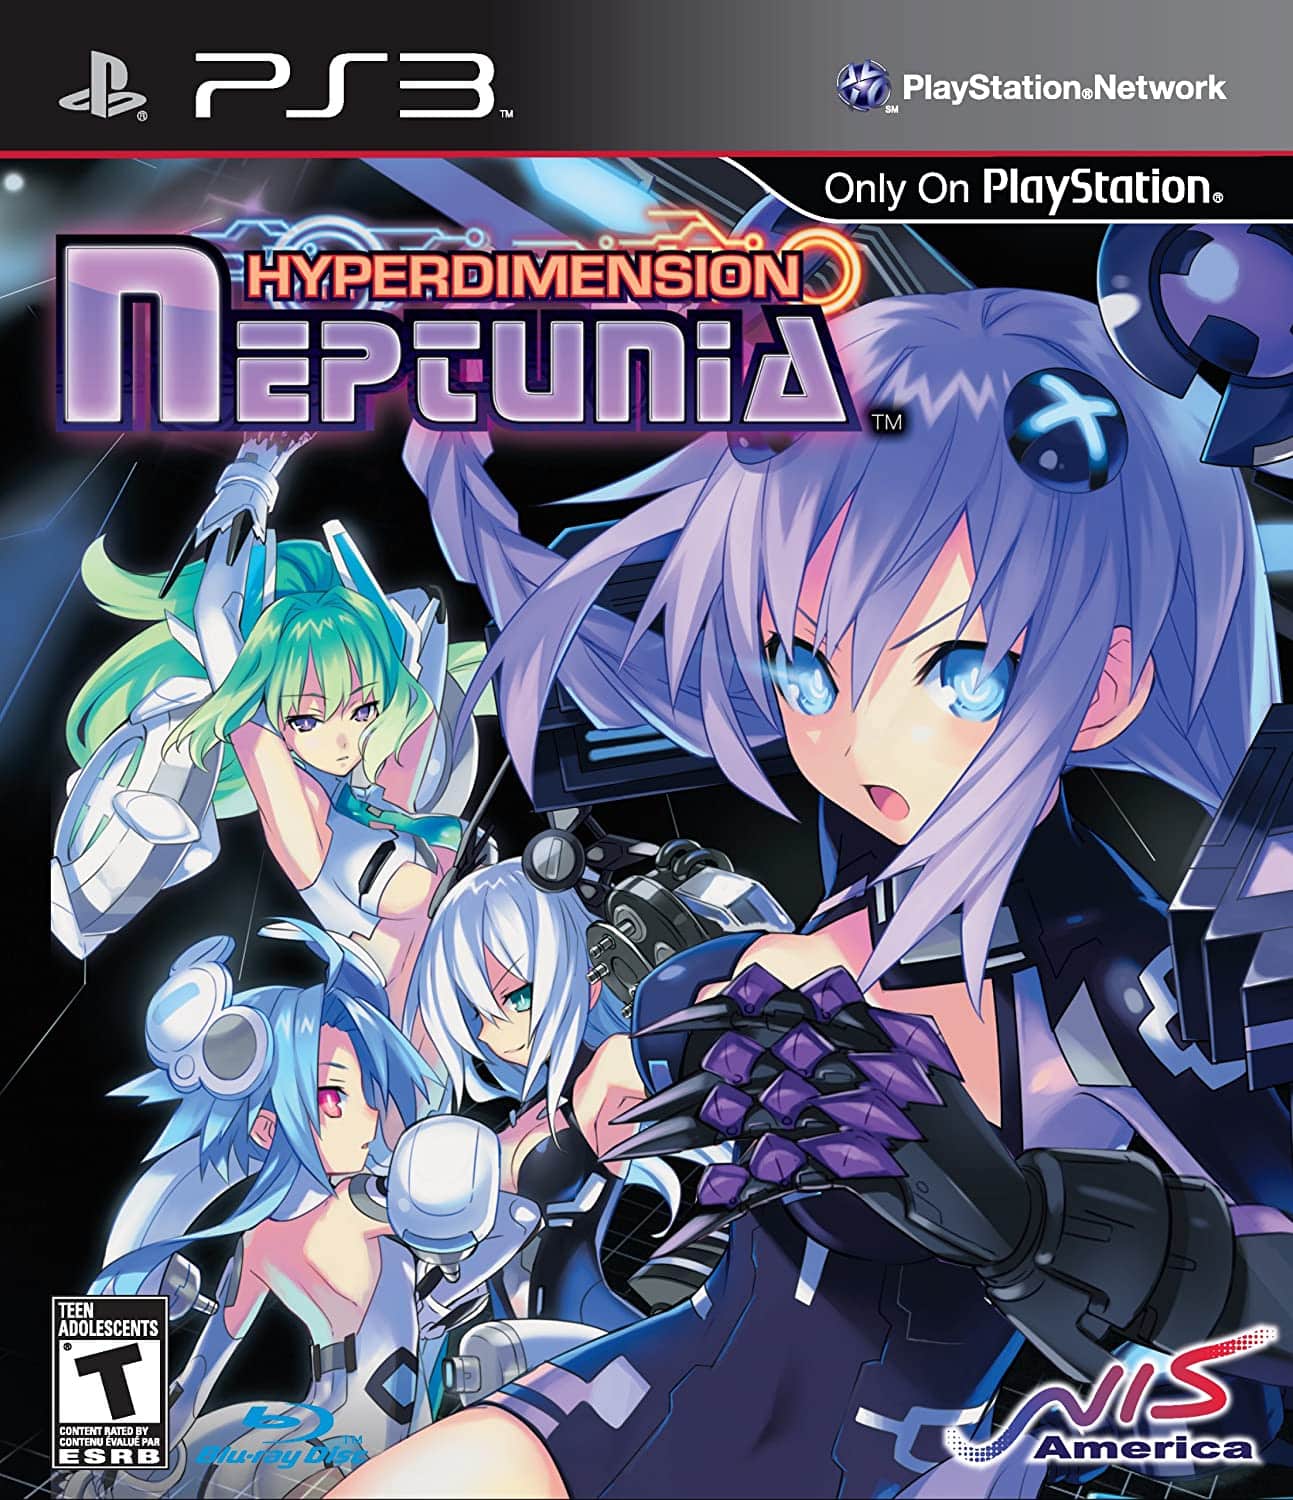 Hyperdimension Neptunia player count stats